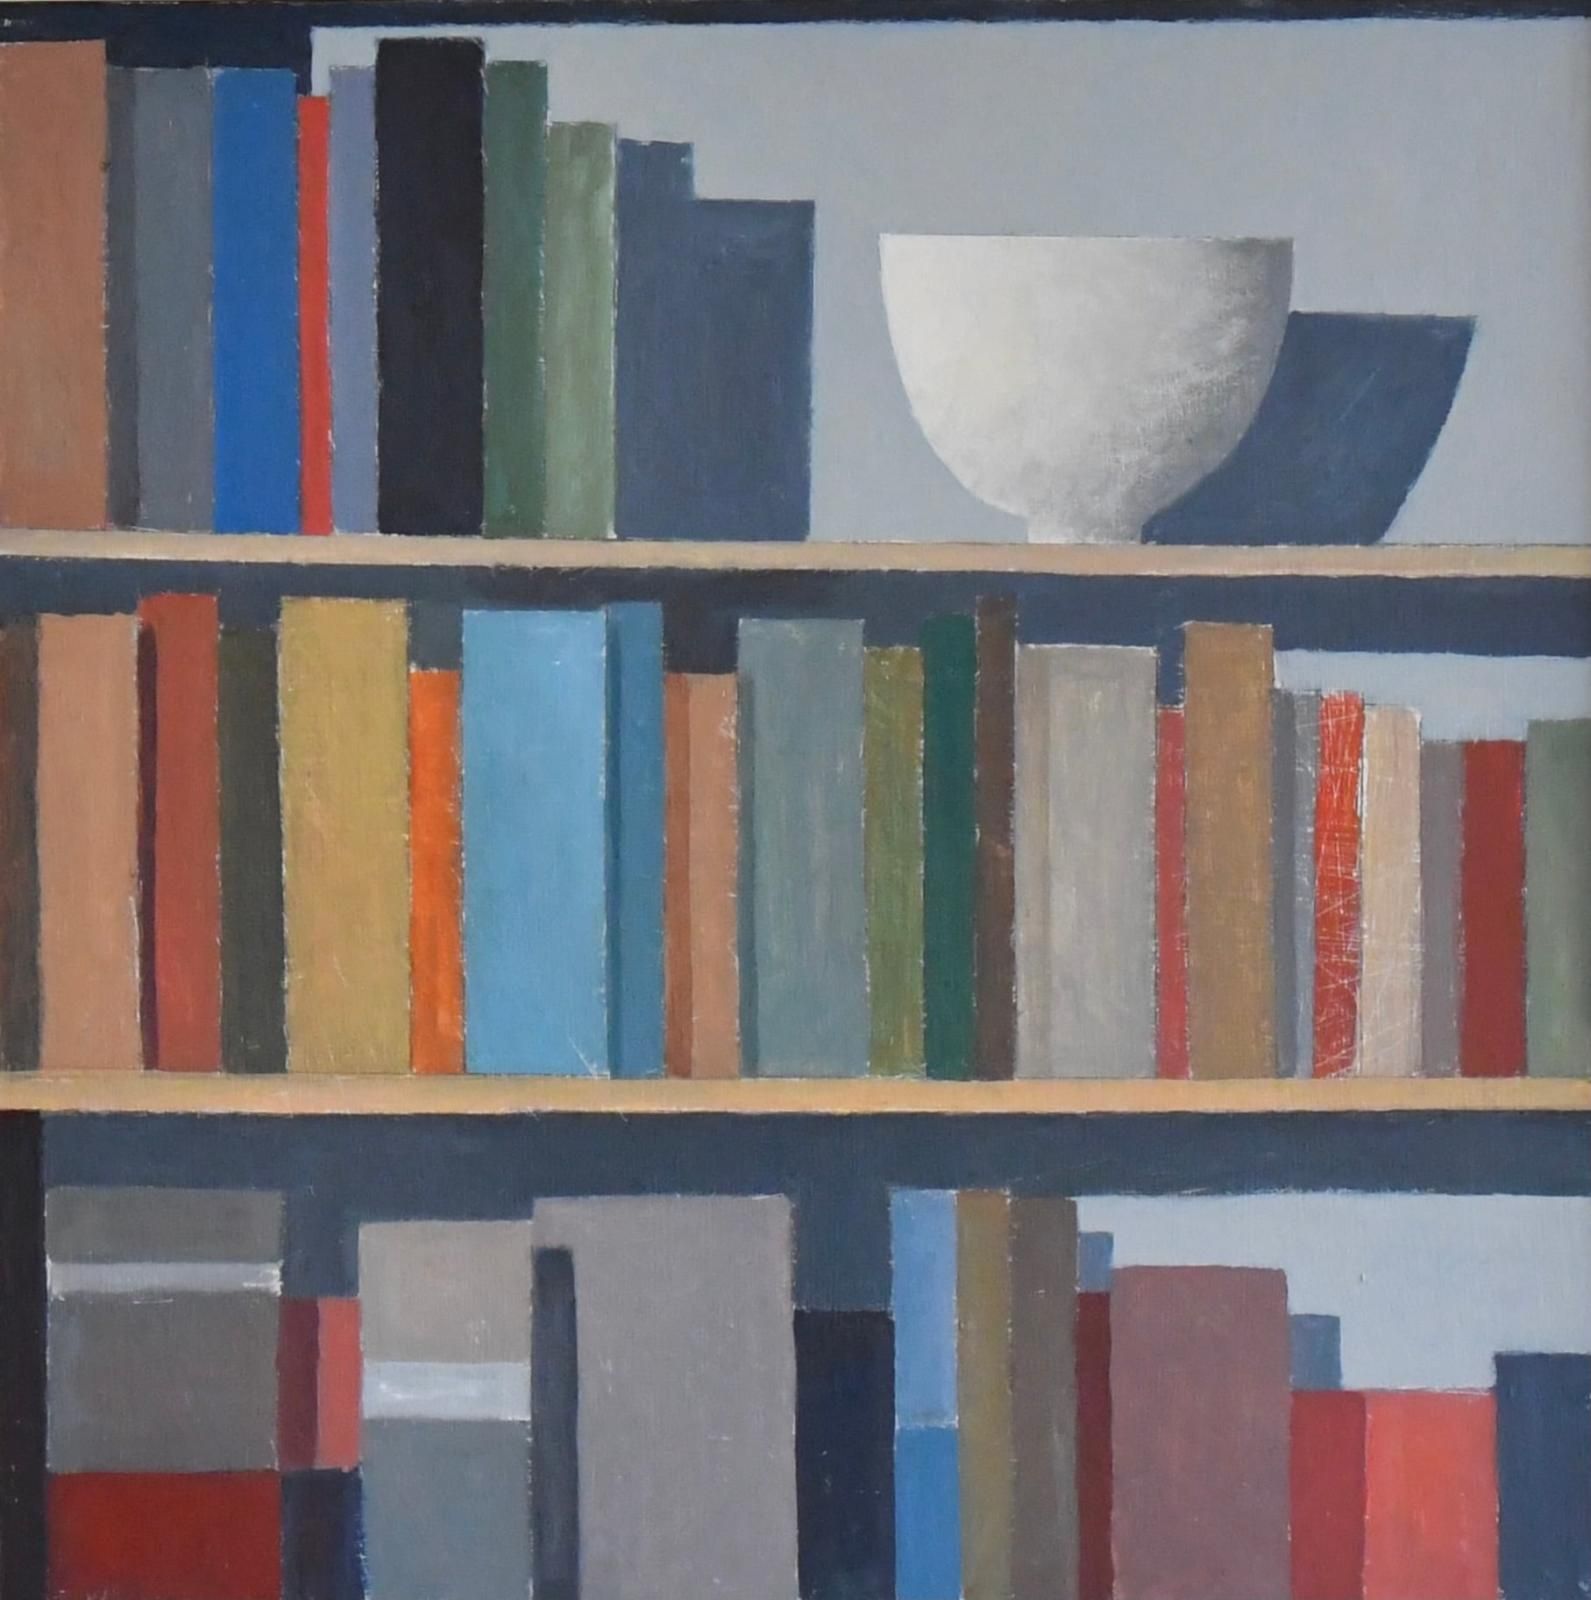 One Bowl, Three Shelves, Many Books by Philip Lyons